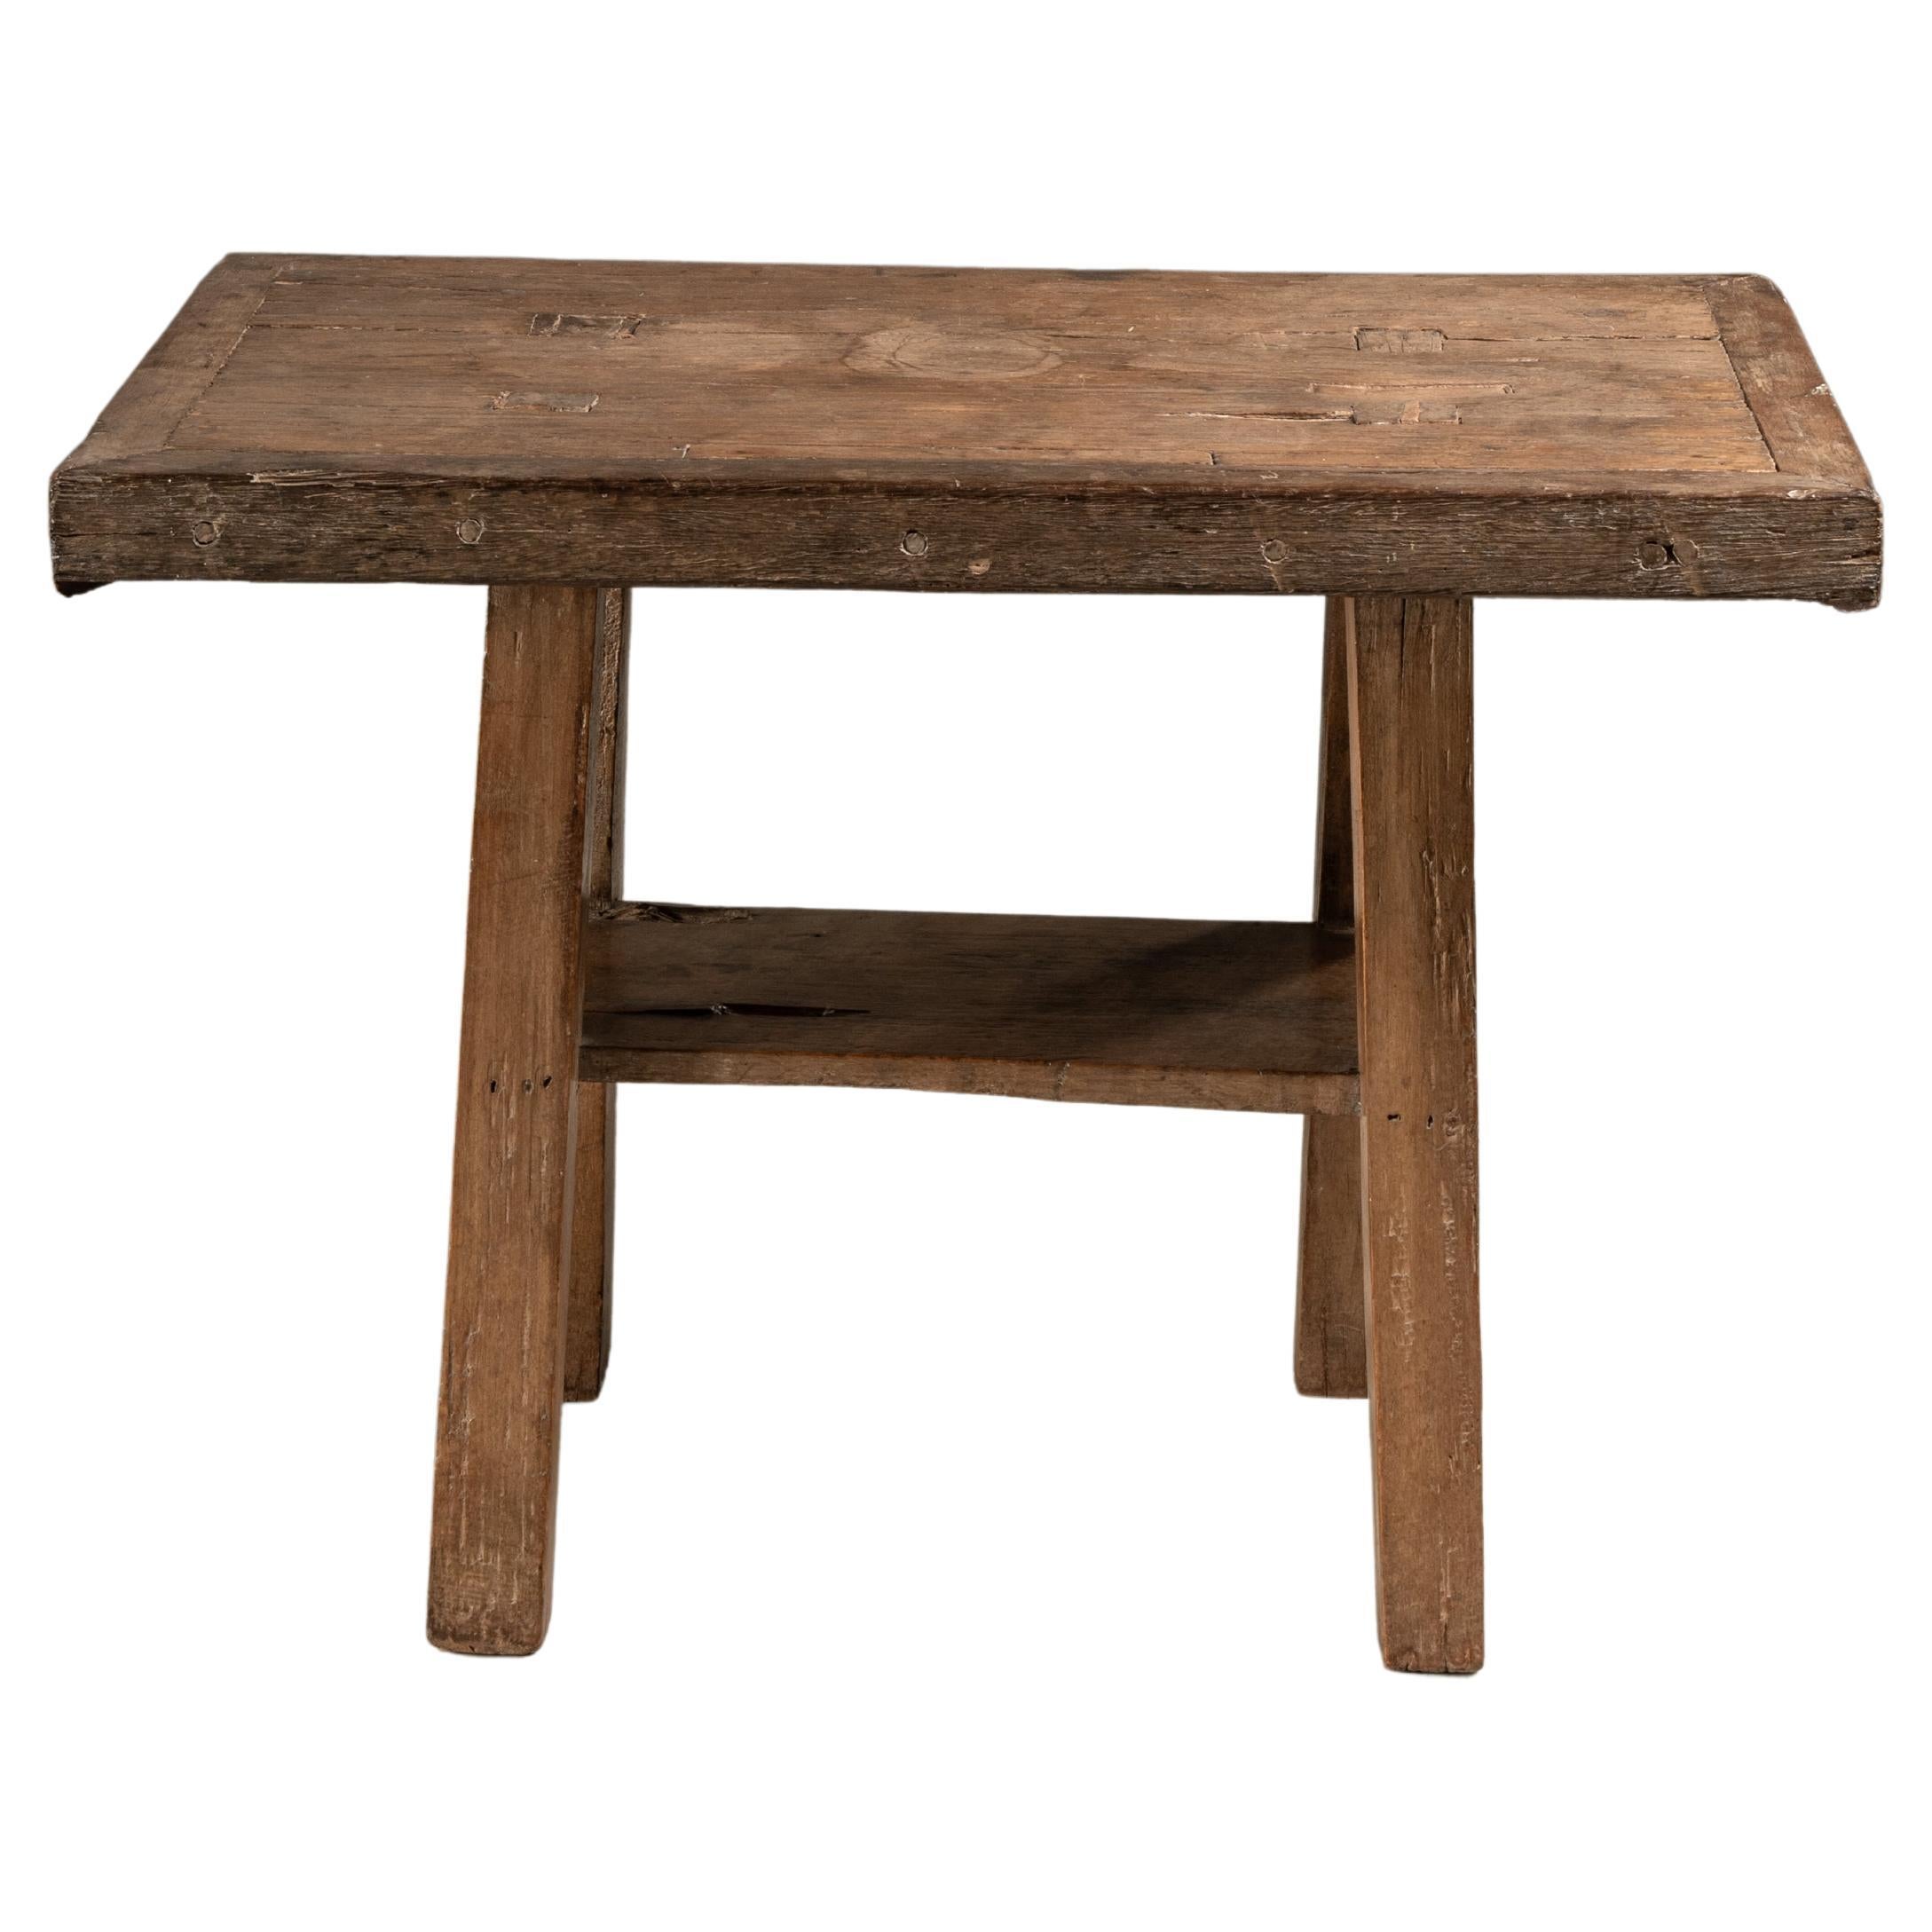 19th Century Wooden Side Table, Brazilian Vernacular Design 